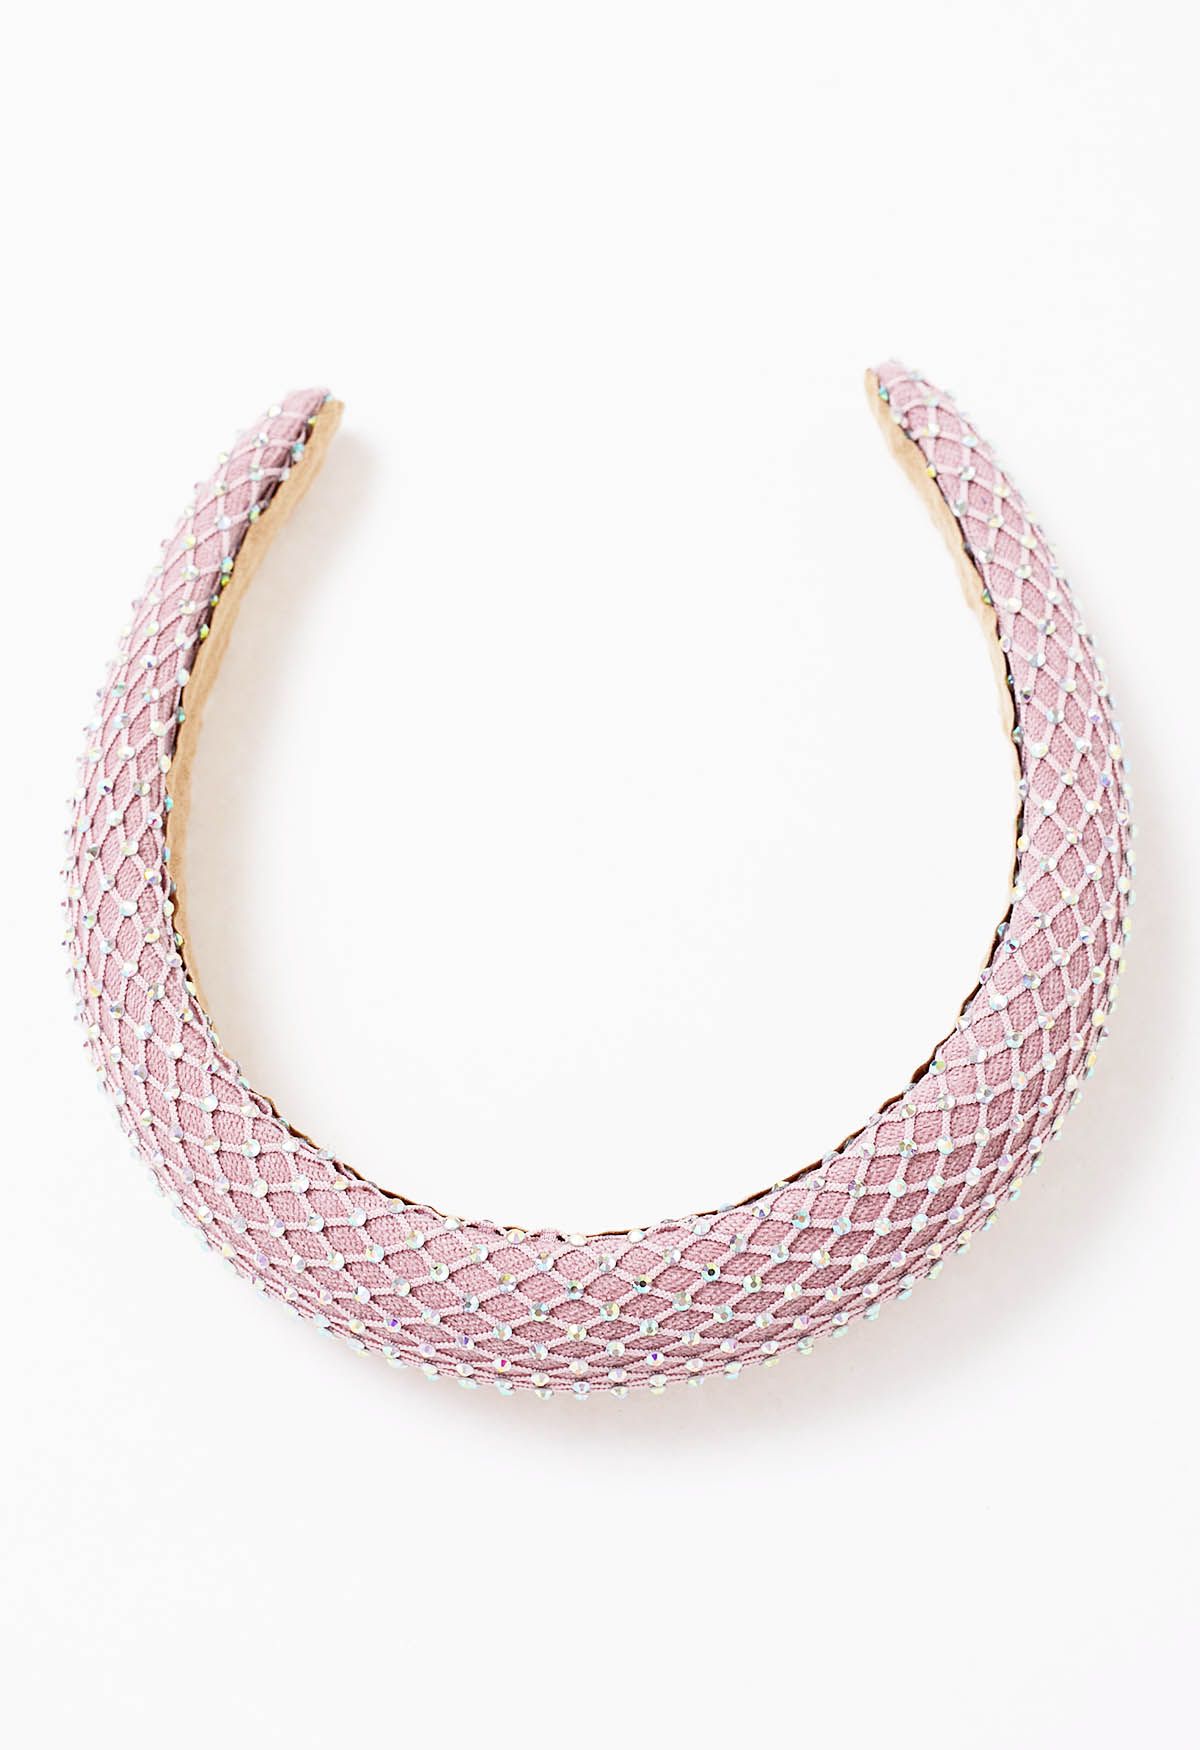 Rhinestone Reticulated Wide Edge Headband in Pink